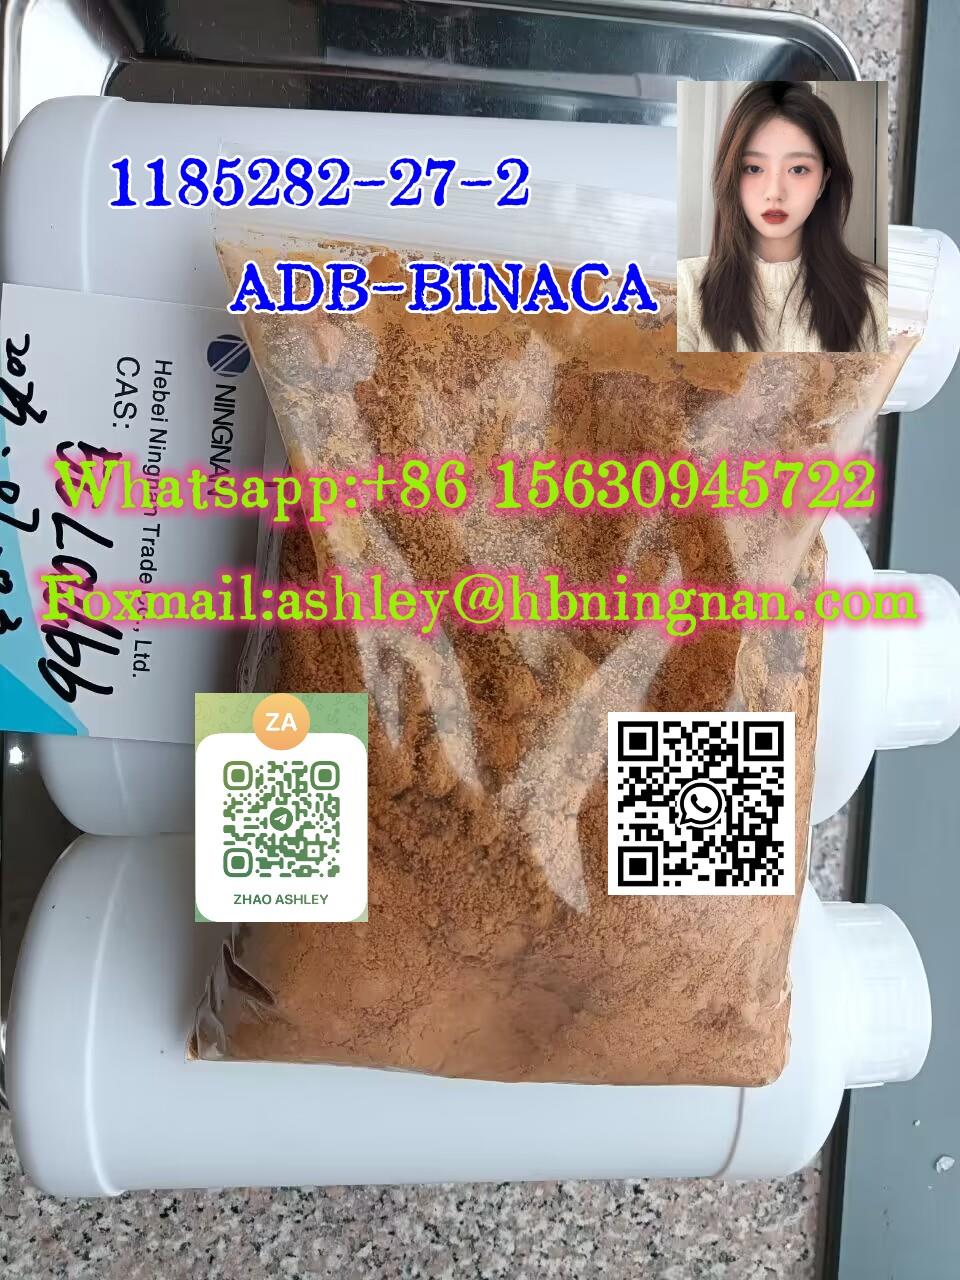 cas 1185282-27-2 ADB-BINACA pharmaceutical intermediates, 1185282-27-2 ADB-BINACA,ningnan,Electrical and Power Generation/Batteries